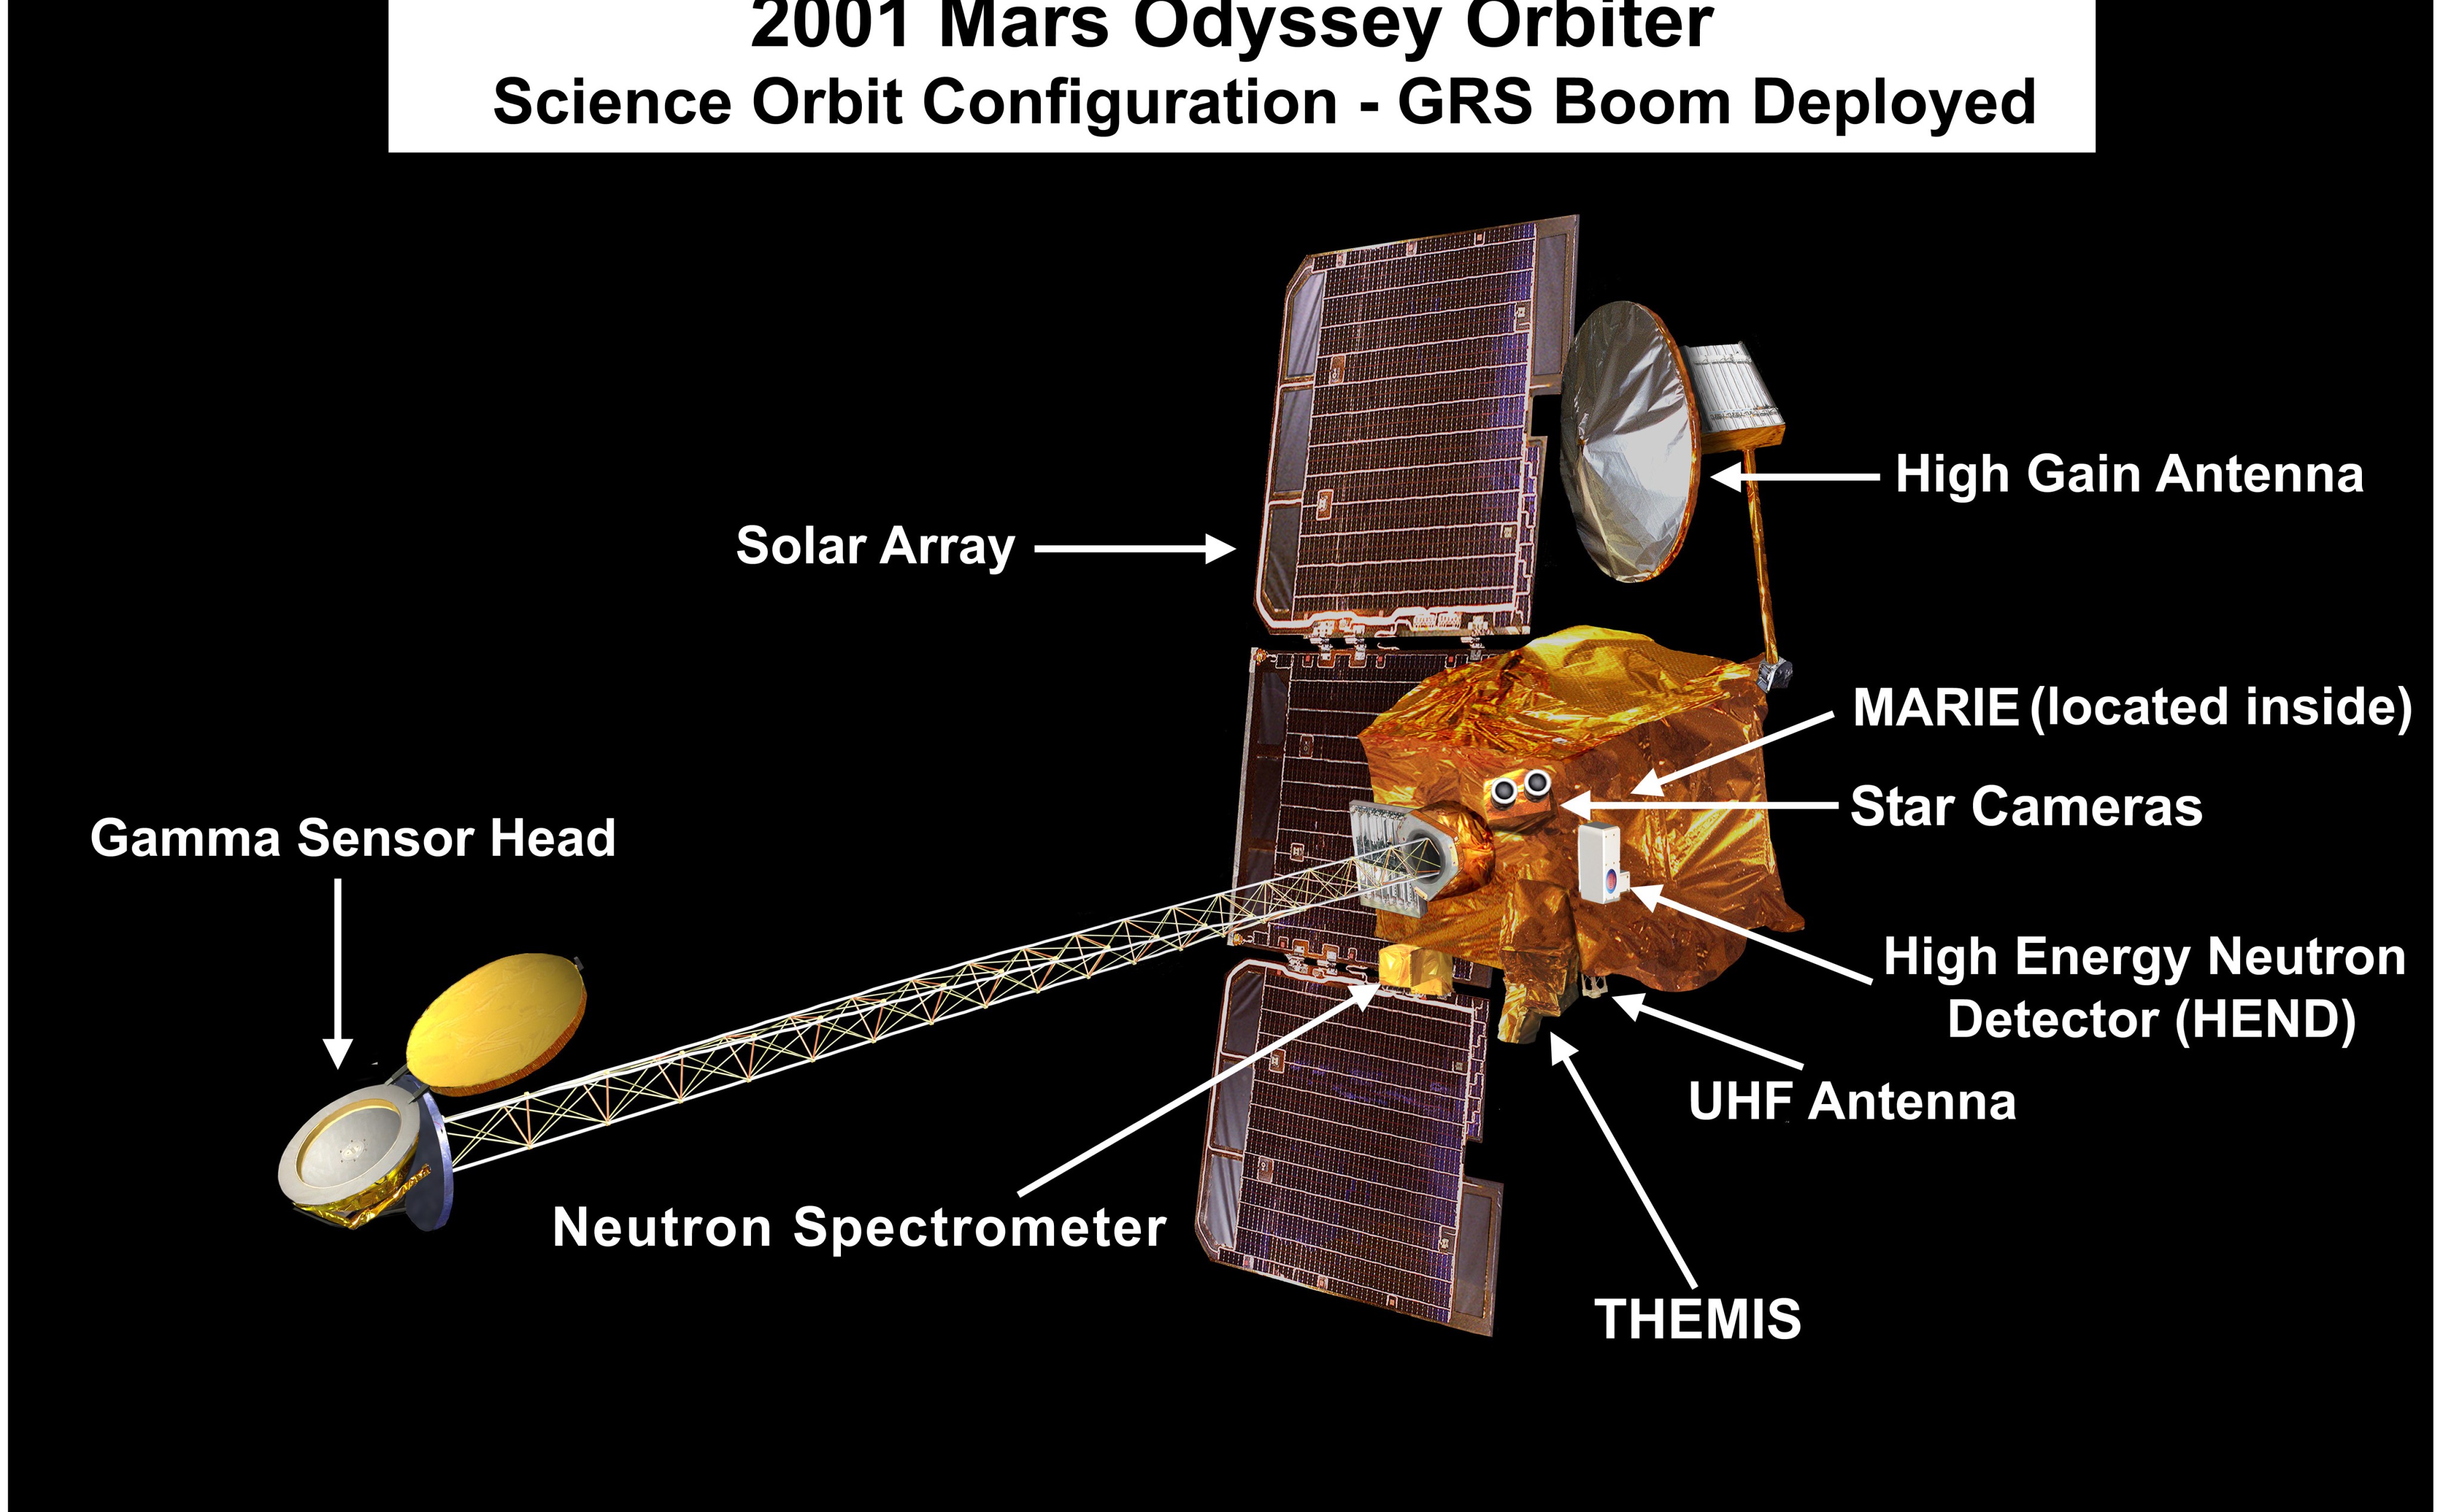 Odyssey - science orbit configuration - GRS boom deployed